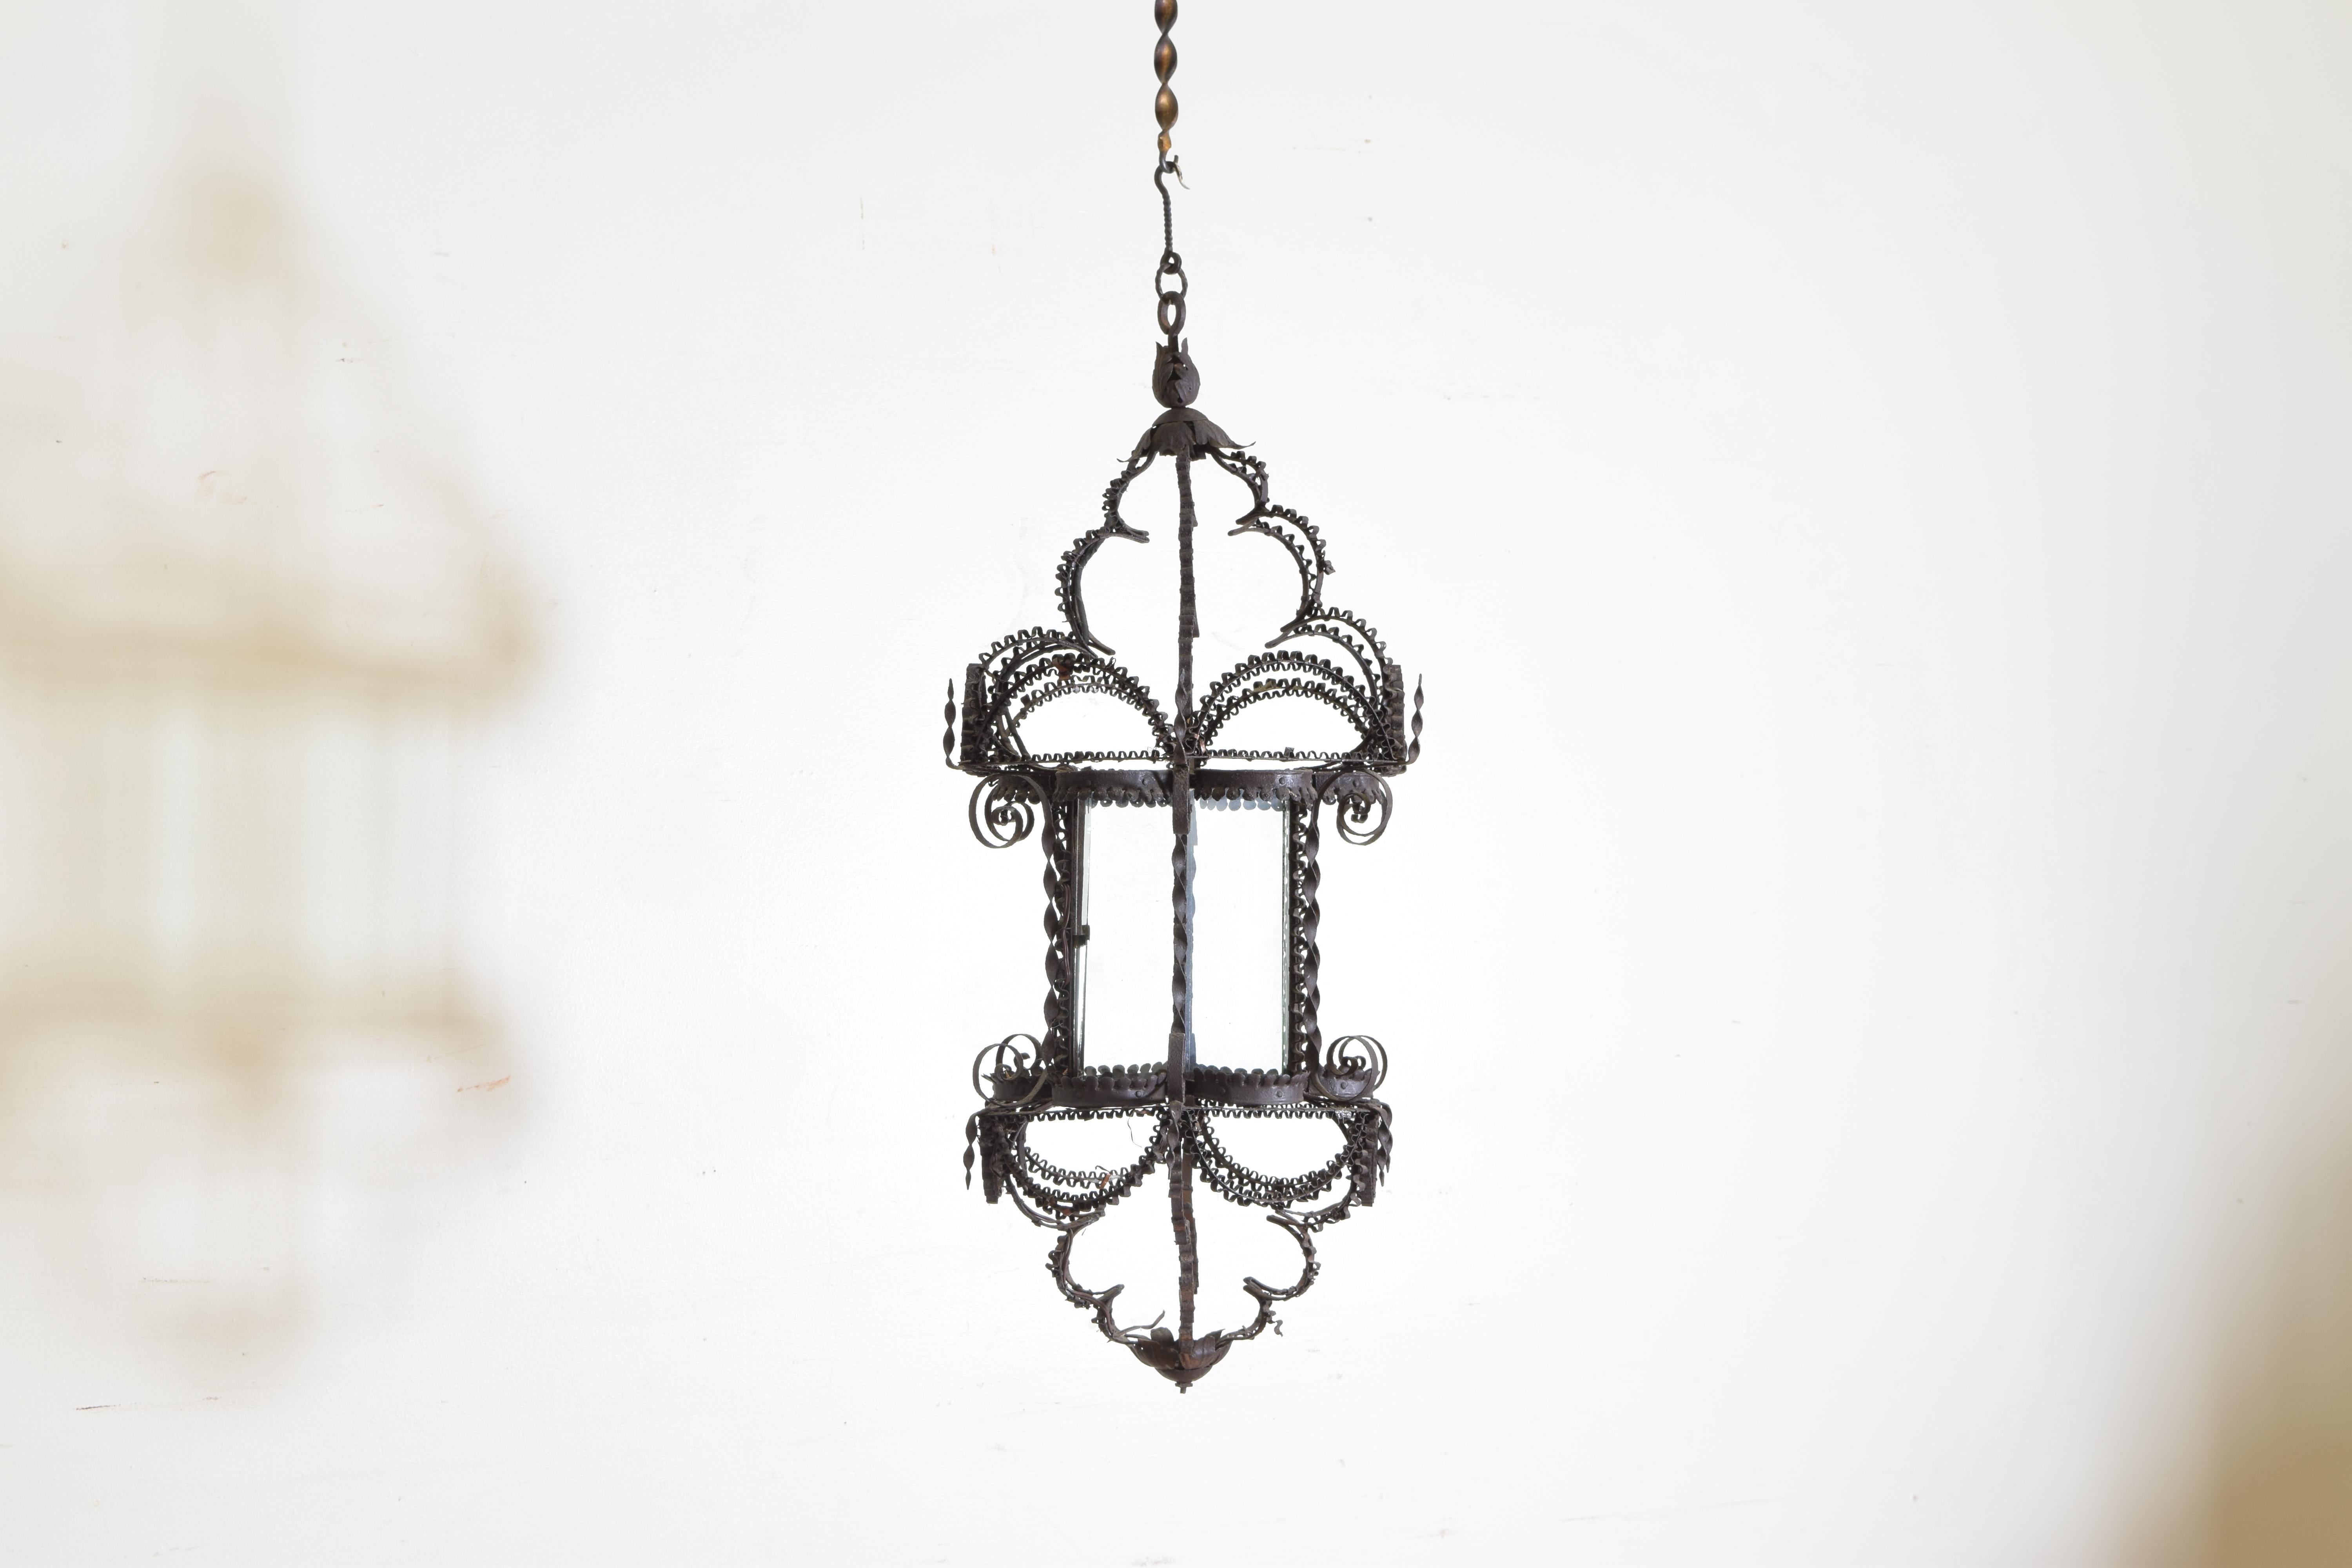 Baroque Revival Wrought Iron Filigree Baroque Style Hanging Glass Paned Lantern, 19th century